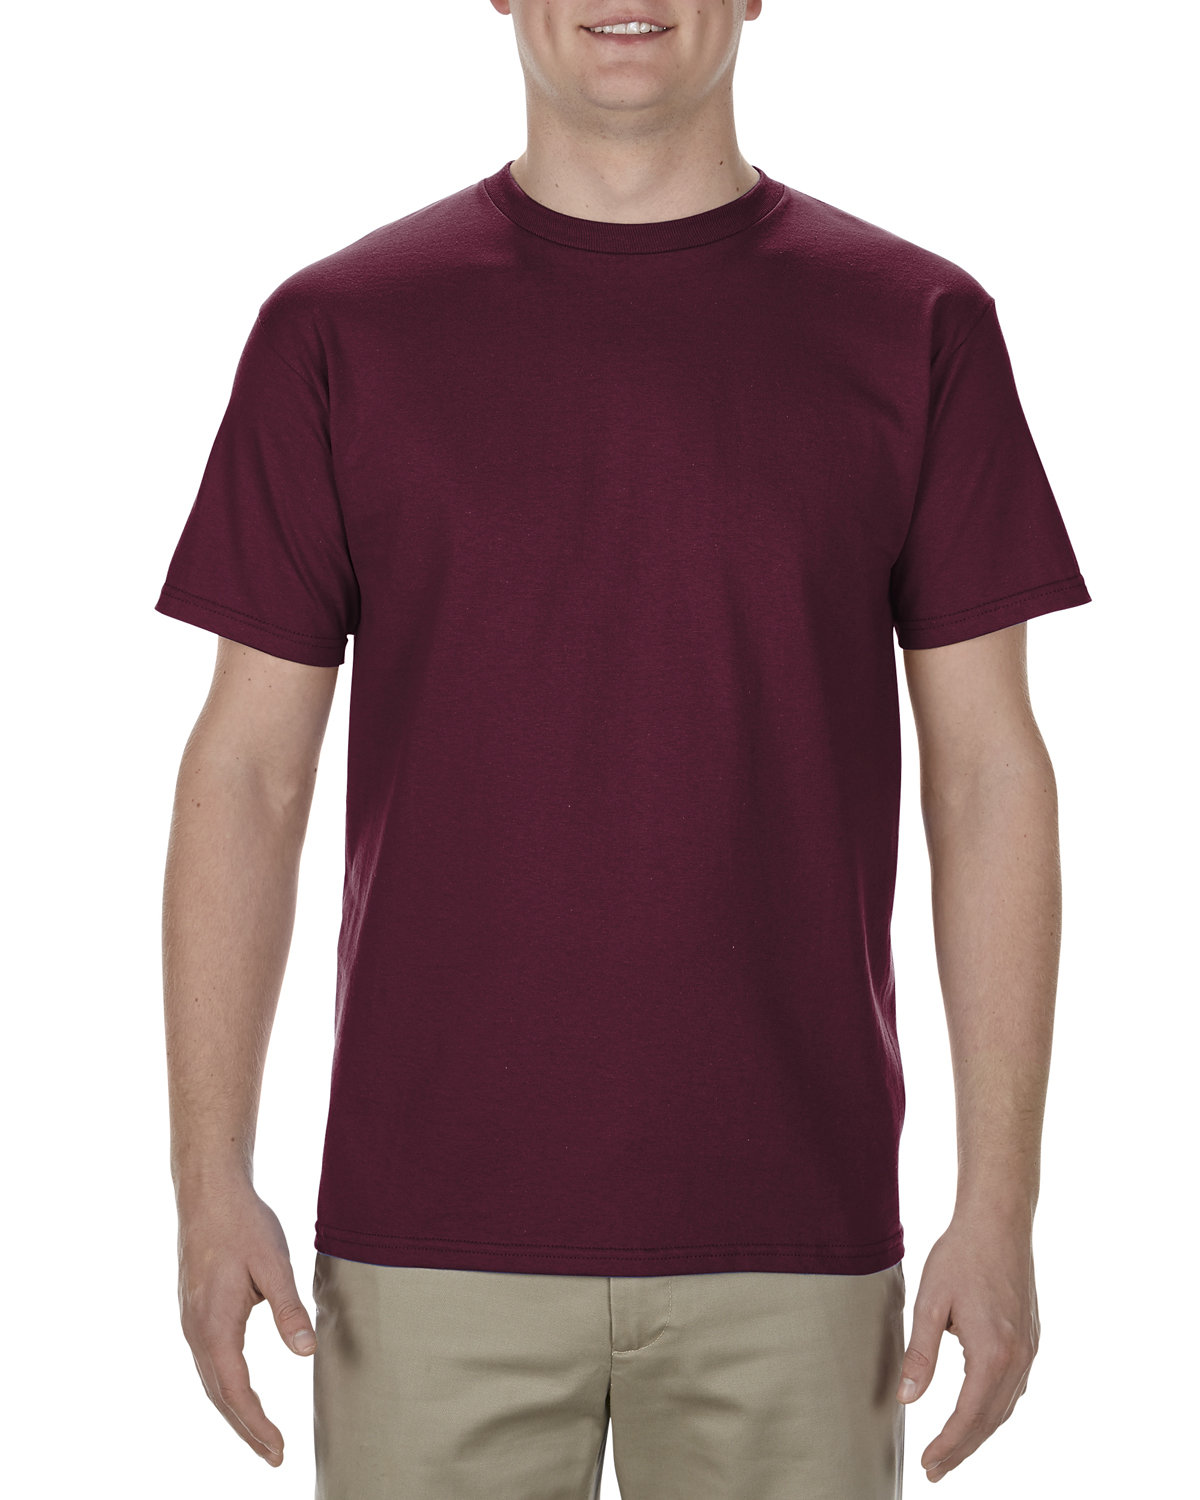 American Apparel Adult 5.1 oz., 100% Soft Spun Cotton T-Shirt BURGUNDY 